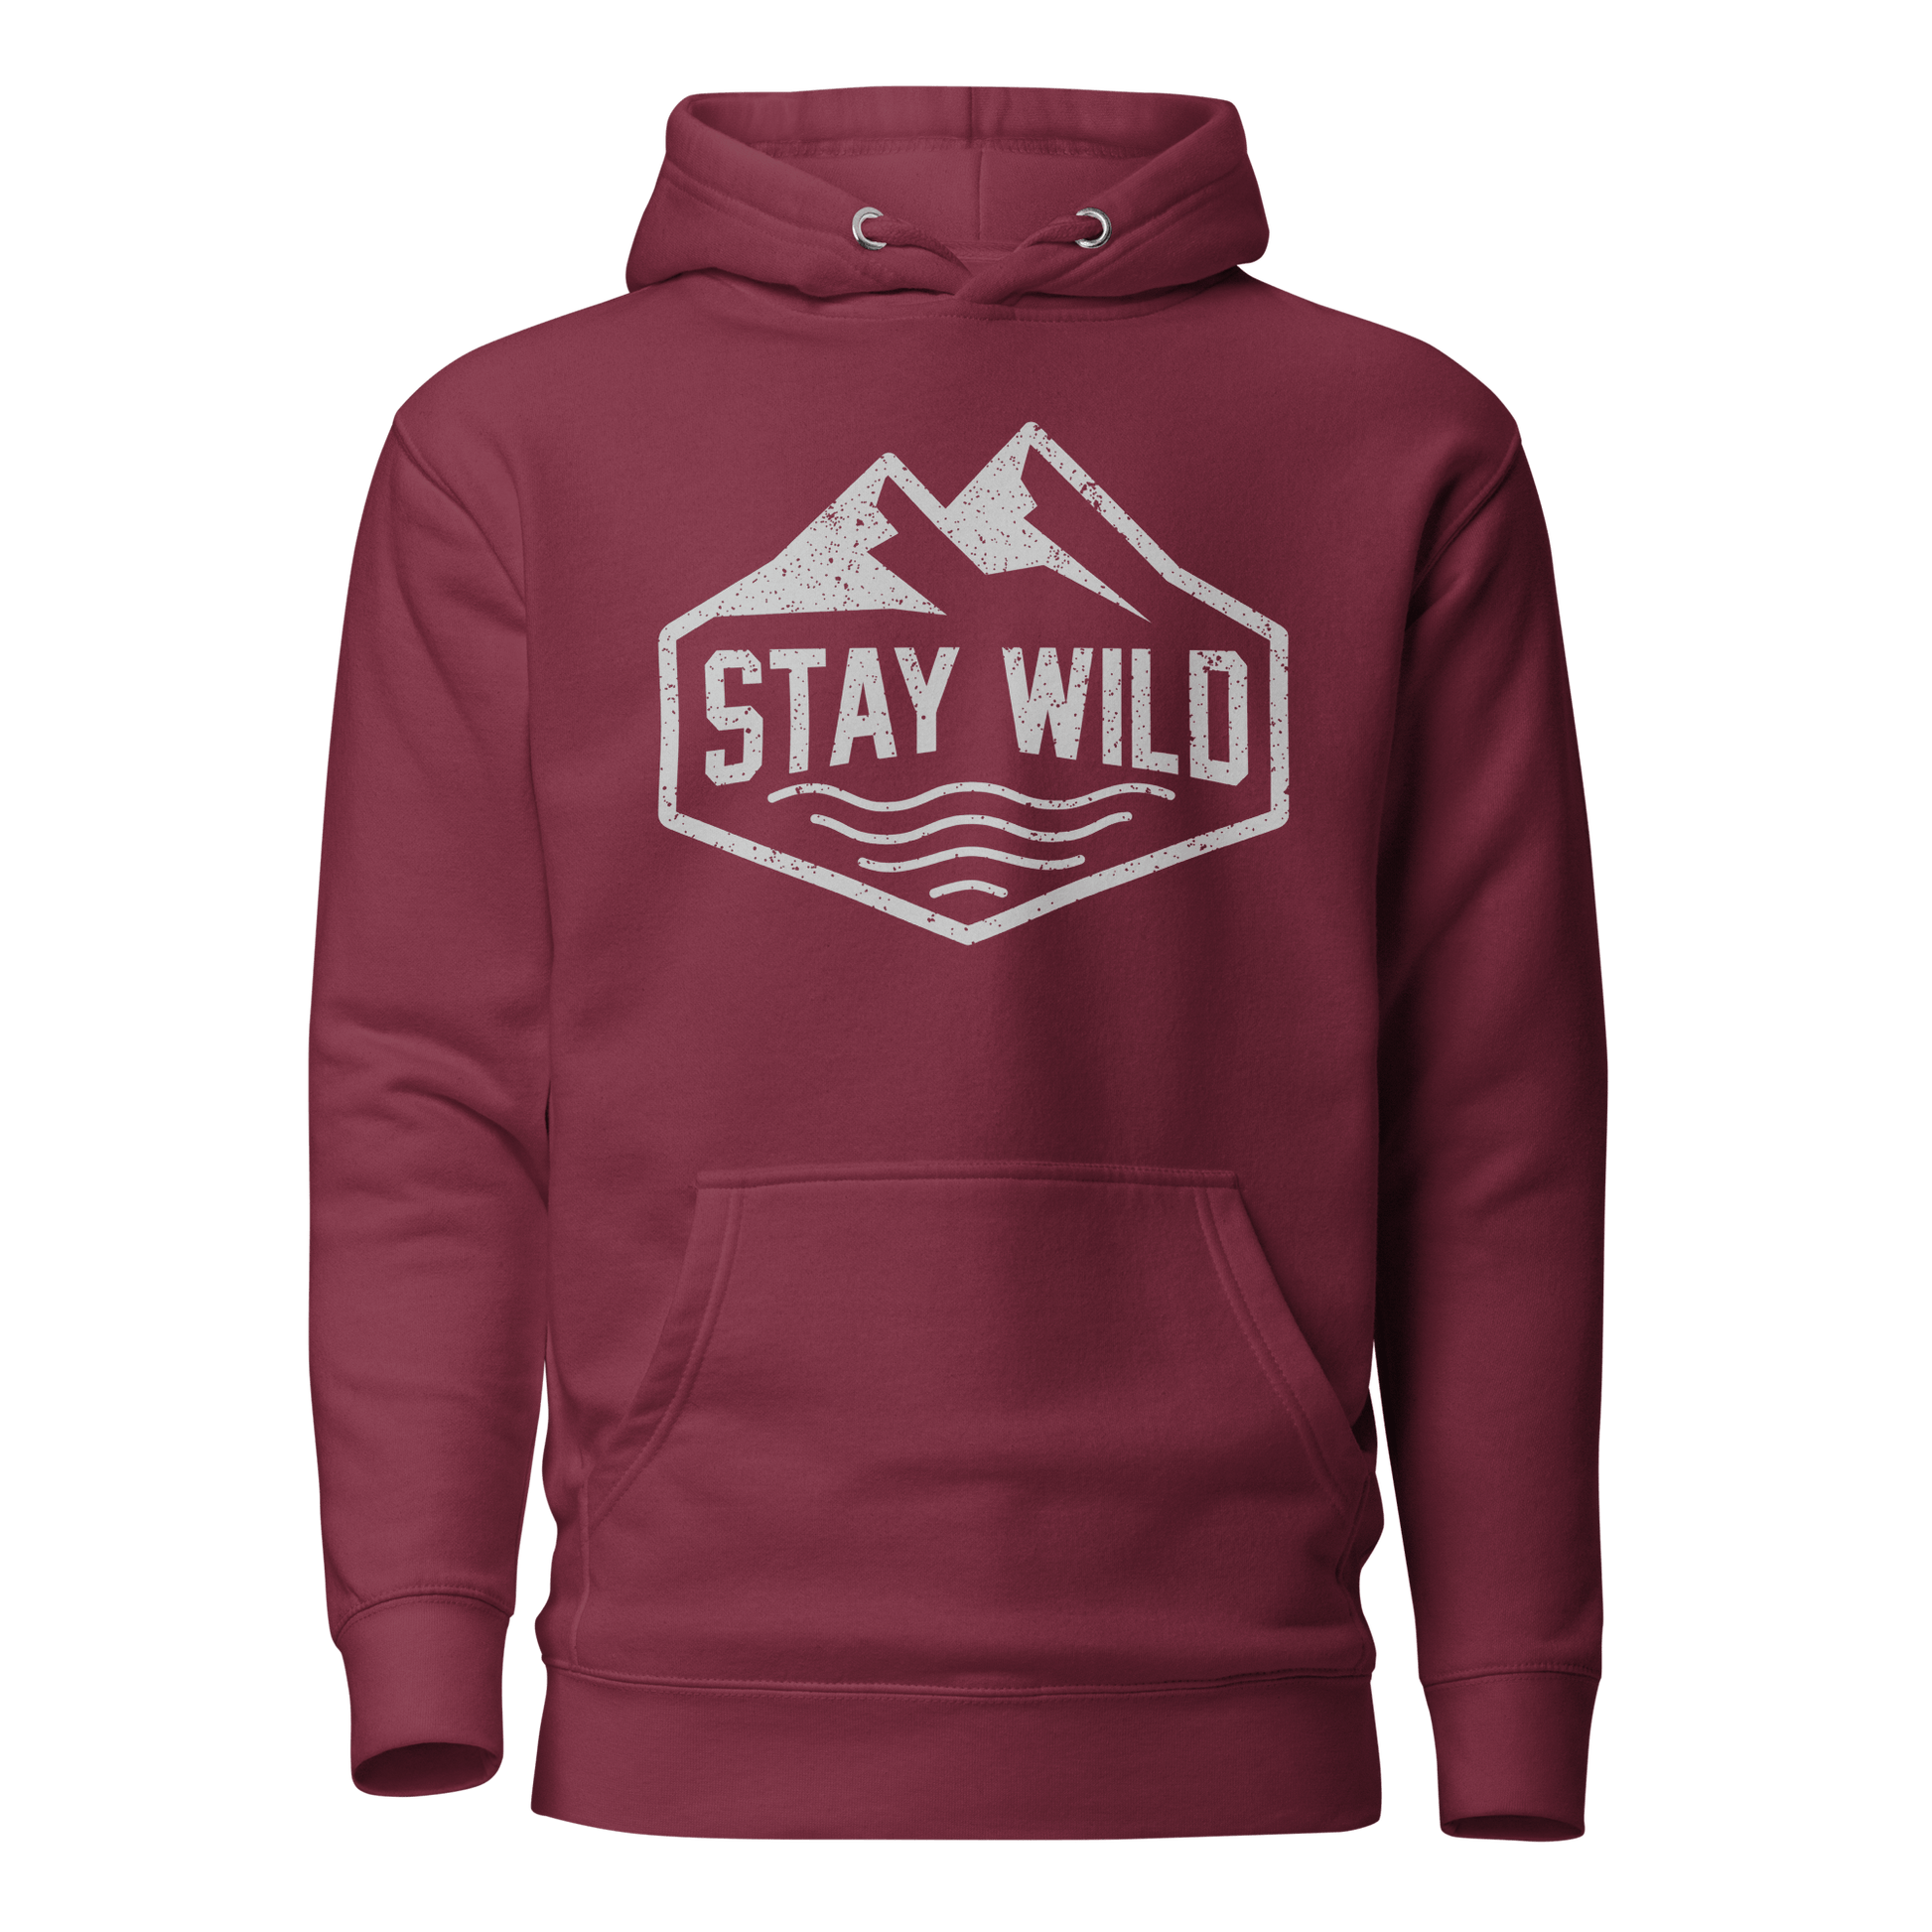 Stay Wild - $ecure1